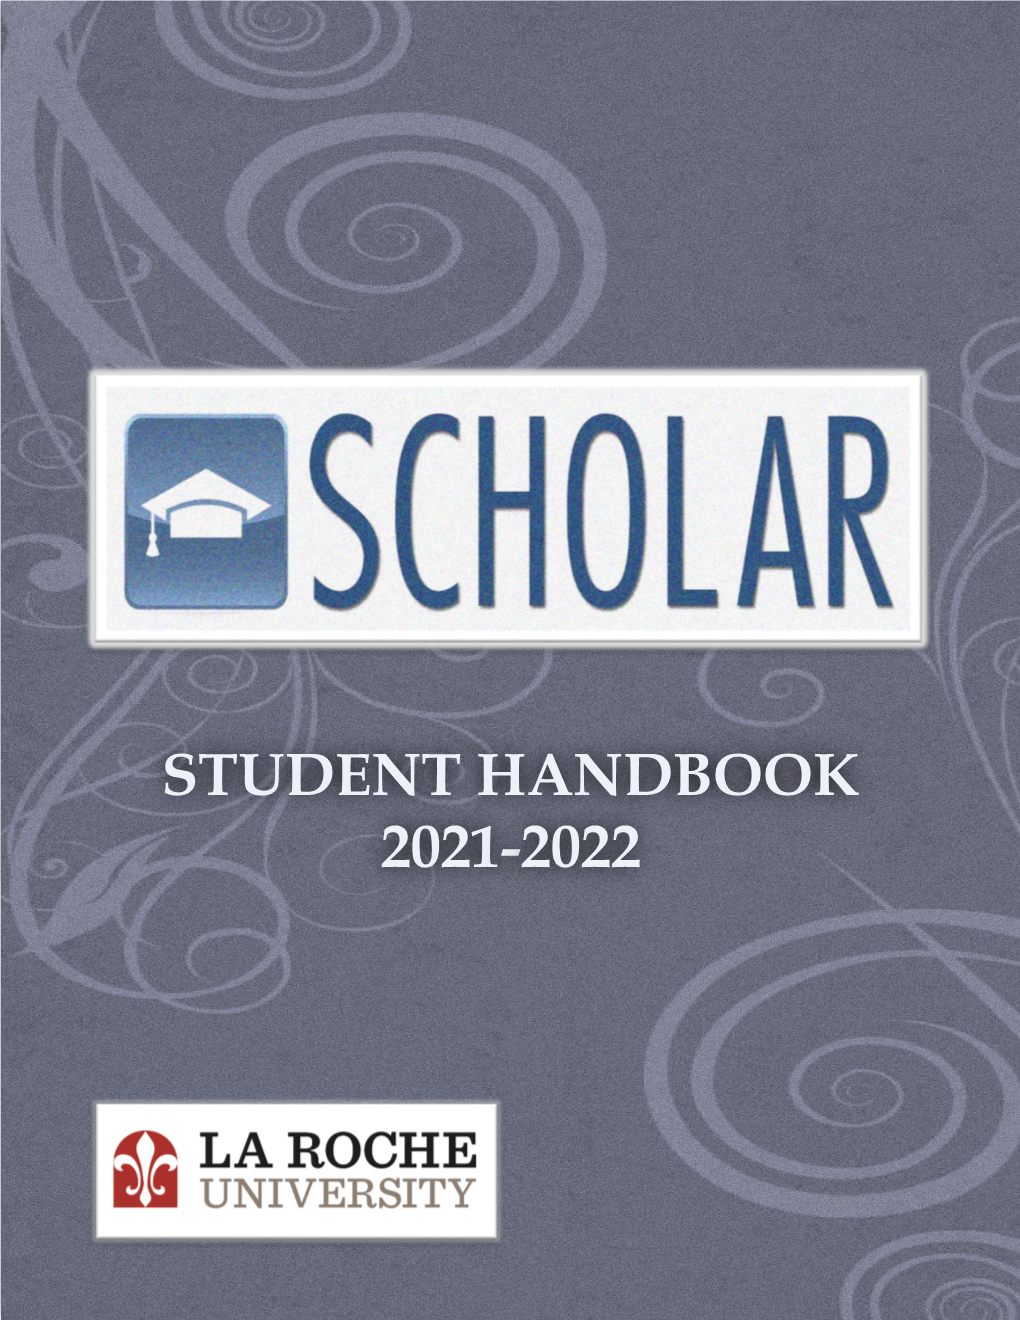 Student Handbook 2021-2022 La Roche University Scholar Program Student Handbook 2021-2022